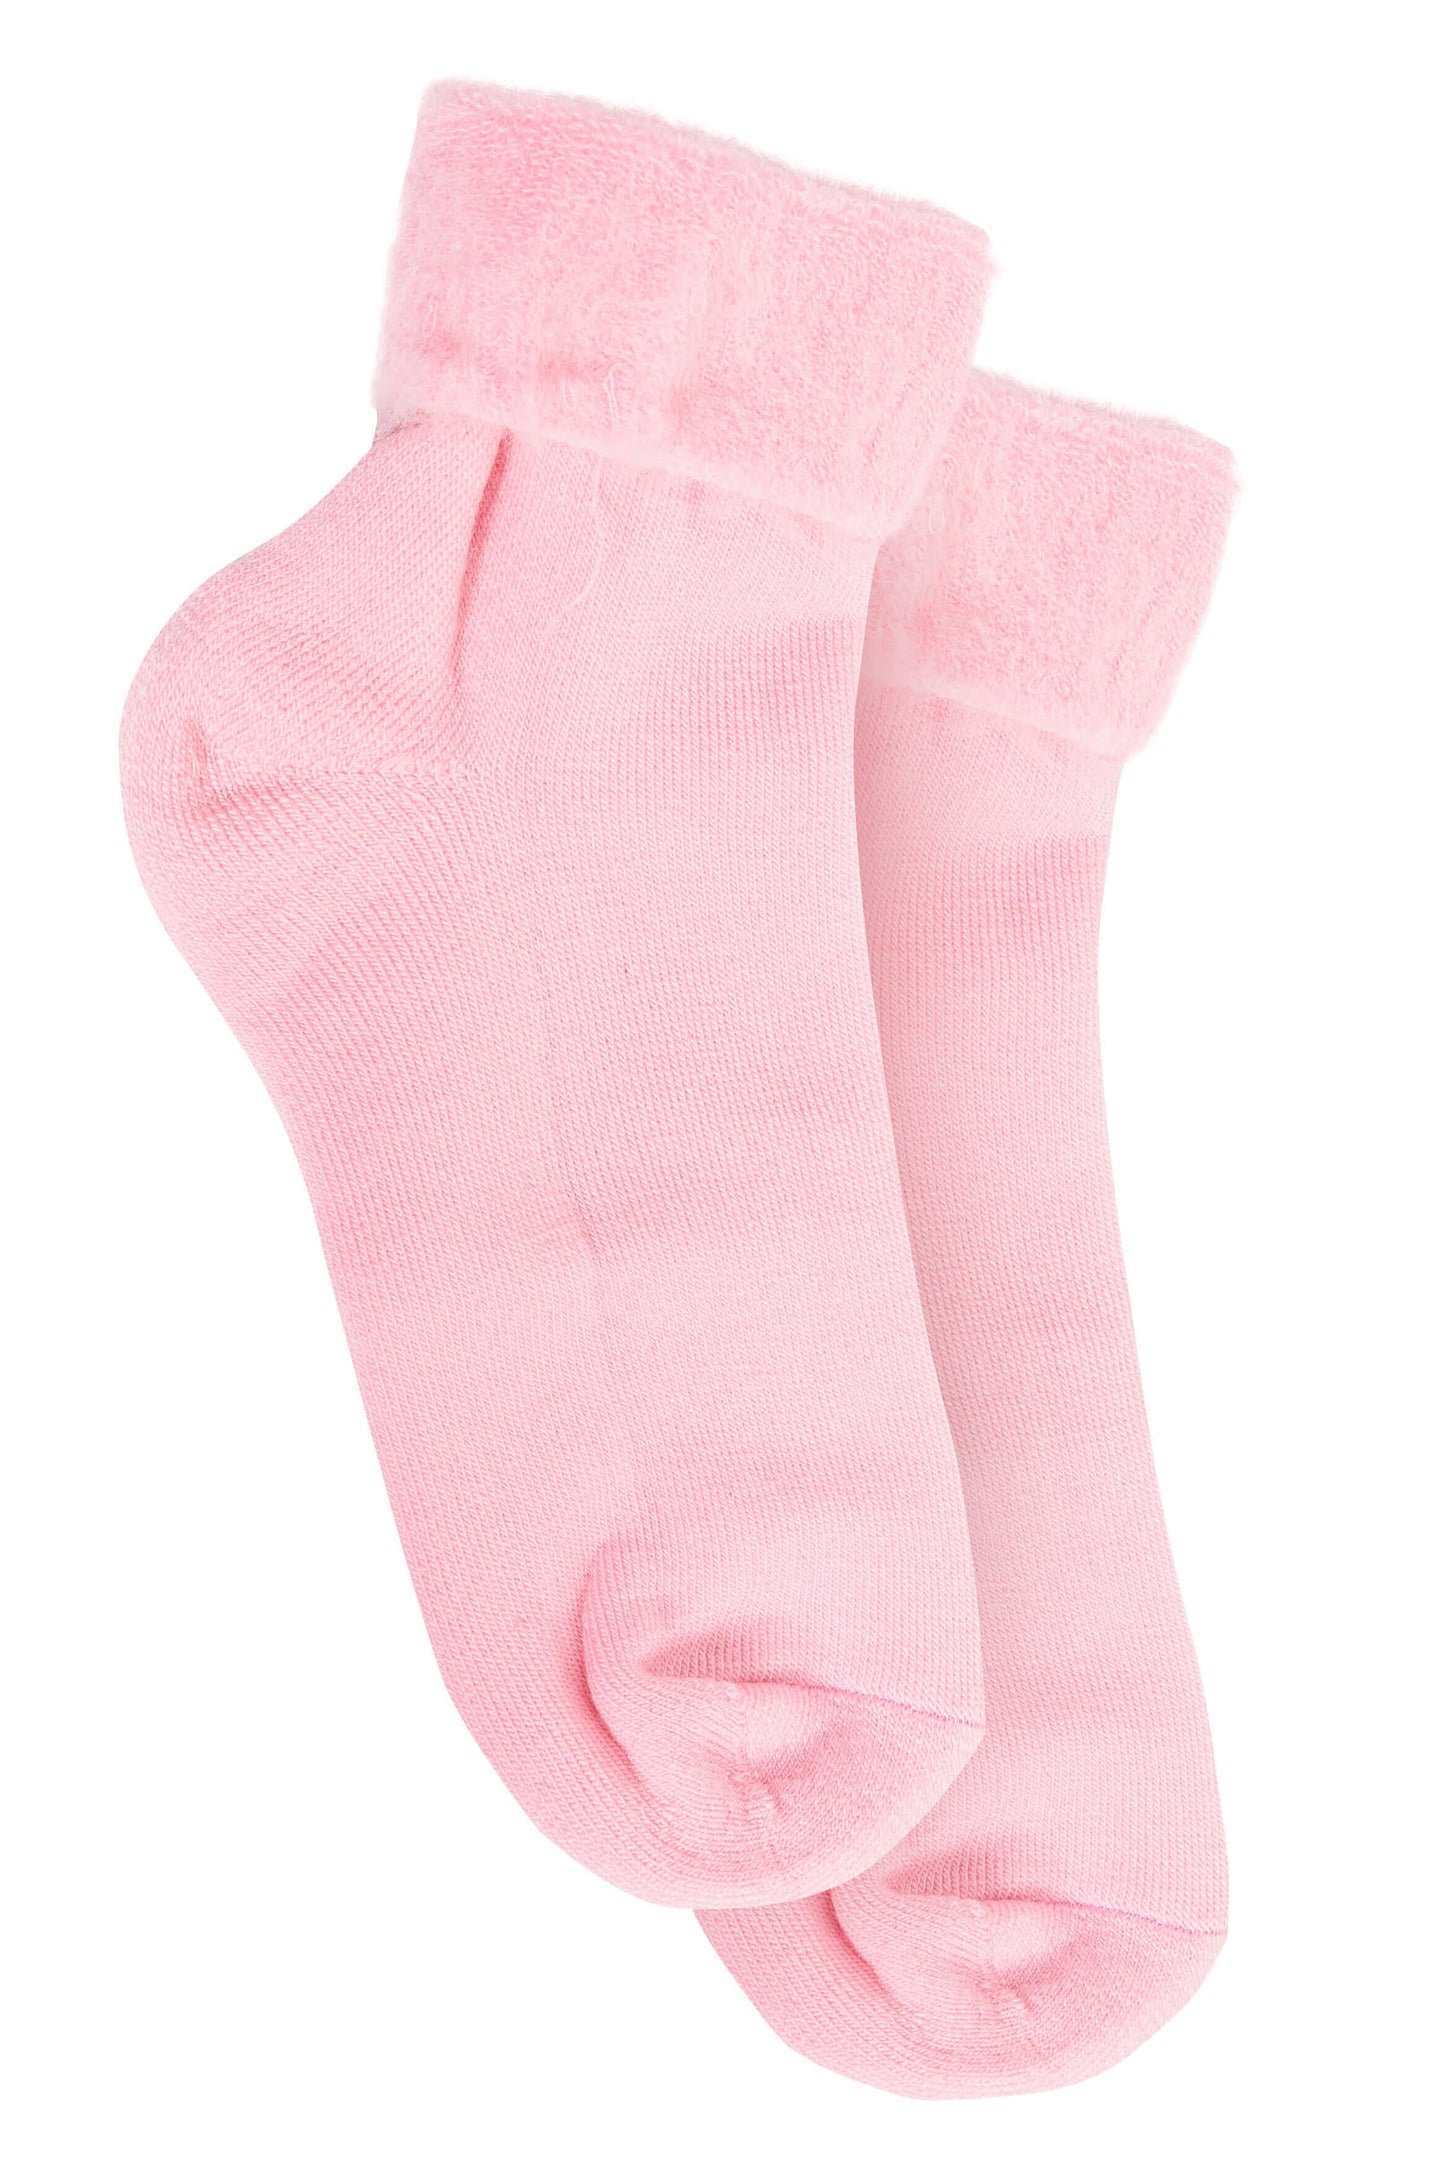 Pack Of 3 Women's Bed Socks Thermal Super Soft Slipper Socks Winter. Buy now for £8.00. A Socks by Sock Stack. 4-7, aqua, assorted, blue, blush pink, boot socks, christmas, cosy, cream, designer, fluffy, fluffy pink, footwear, girls, girls socks, green, h